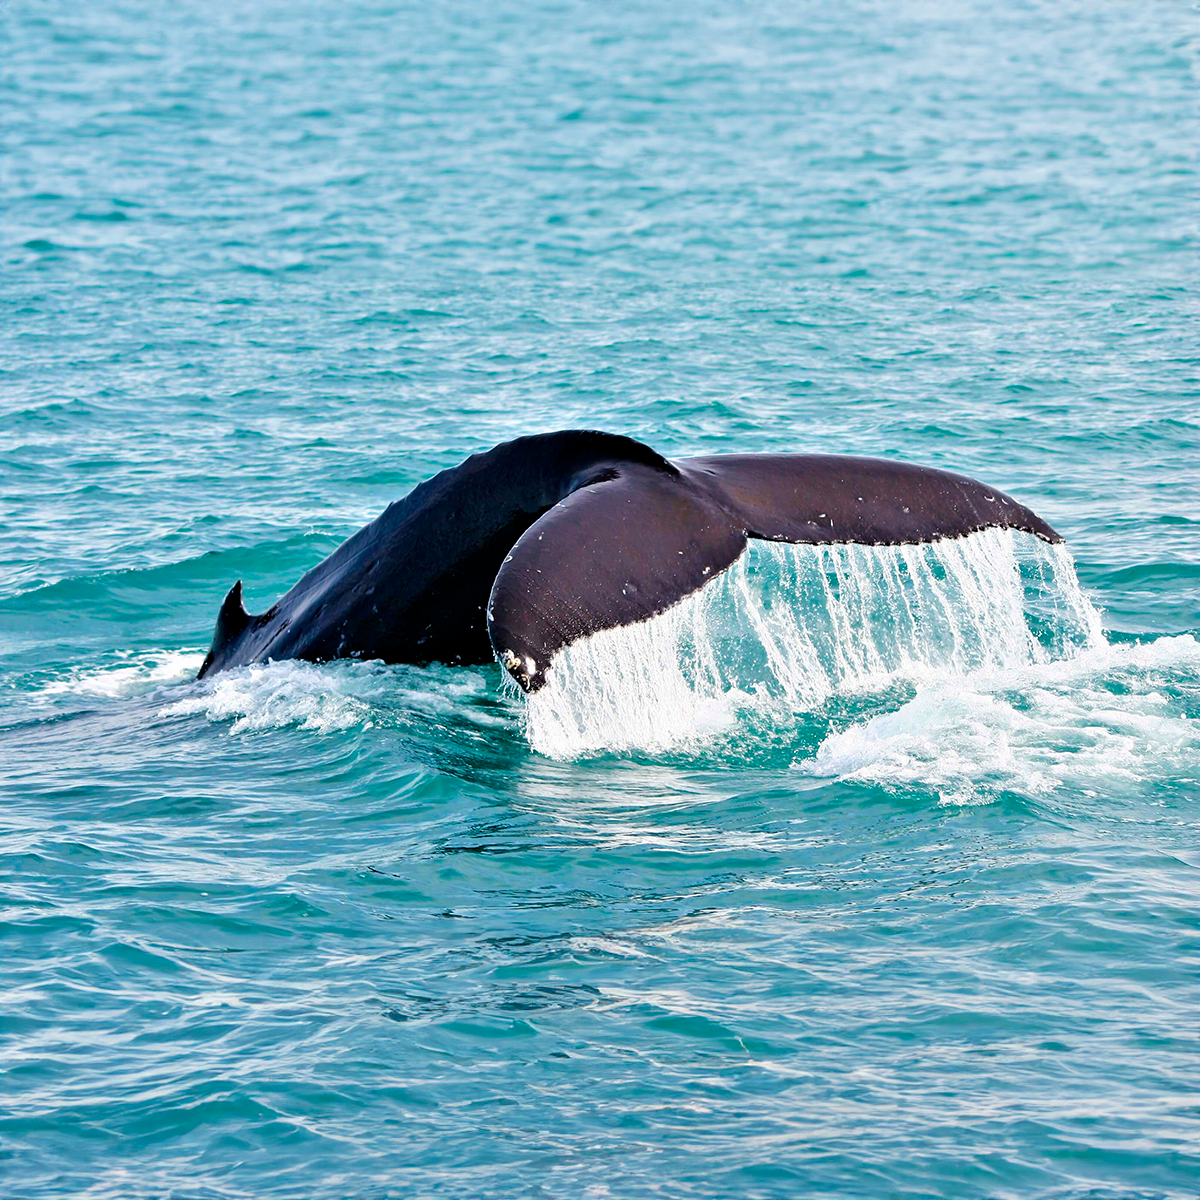 Tour costero-avistamiento de ballenas jorobadas